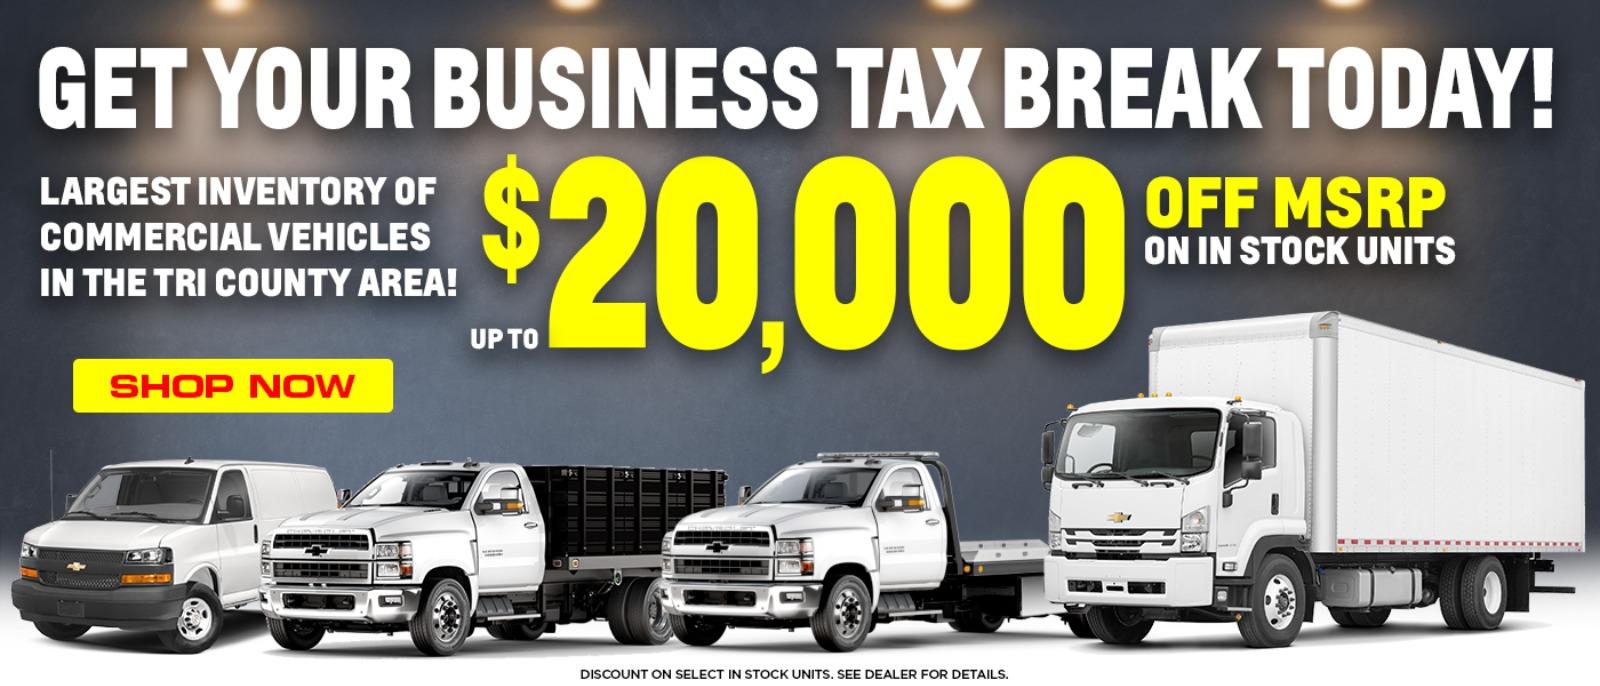 Get your business tax break today